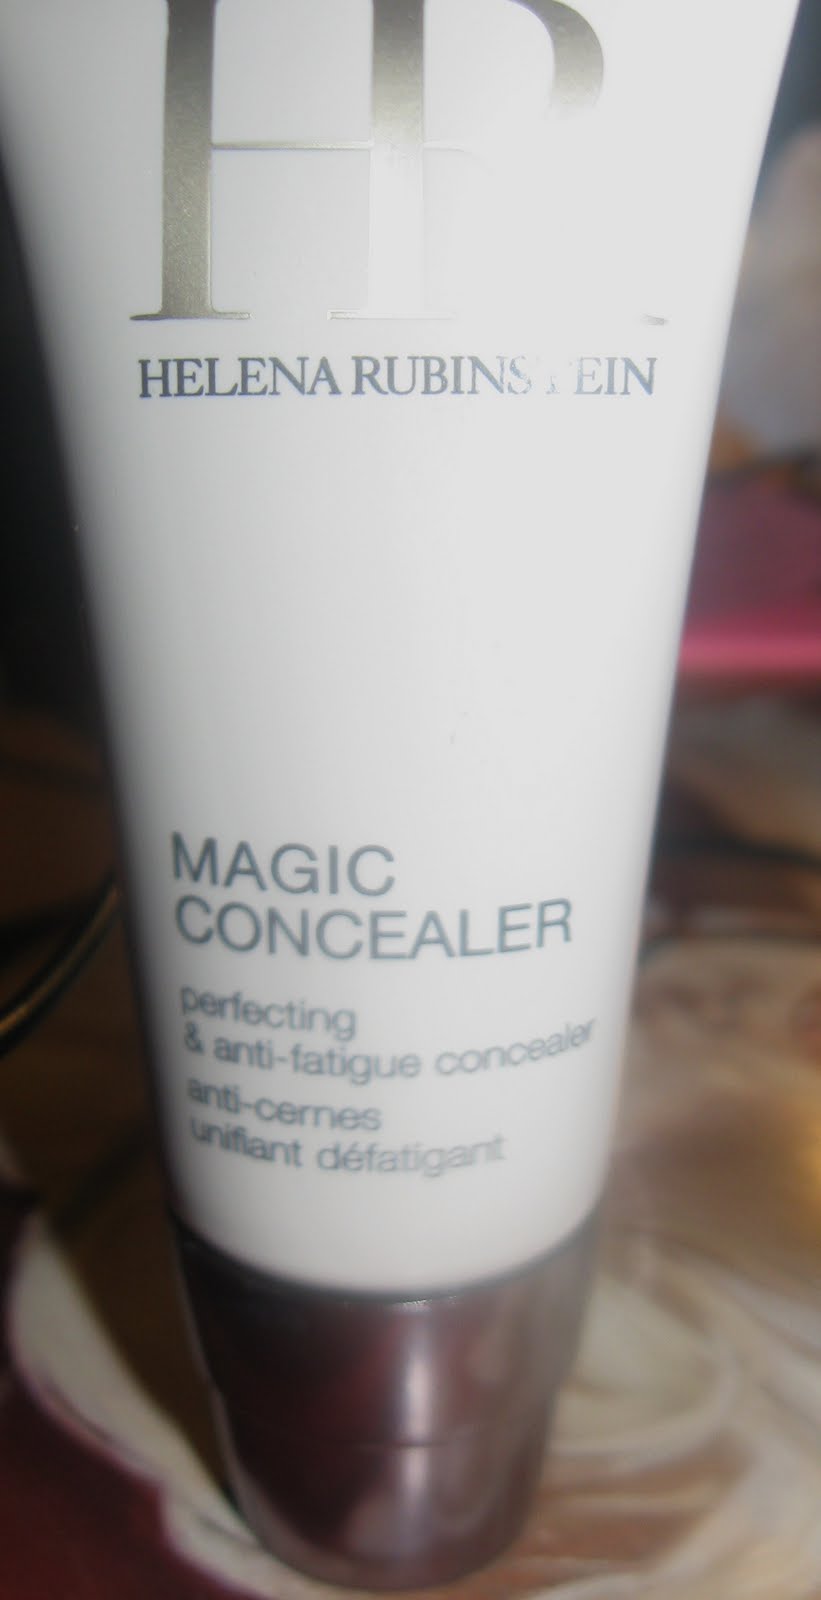 Magic Concealer - 01 Light by Helena Rubinstein for Women - 0.5 oz Concealer